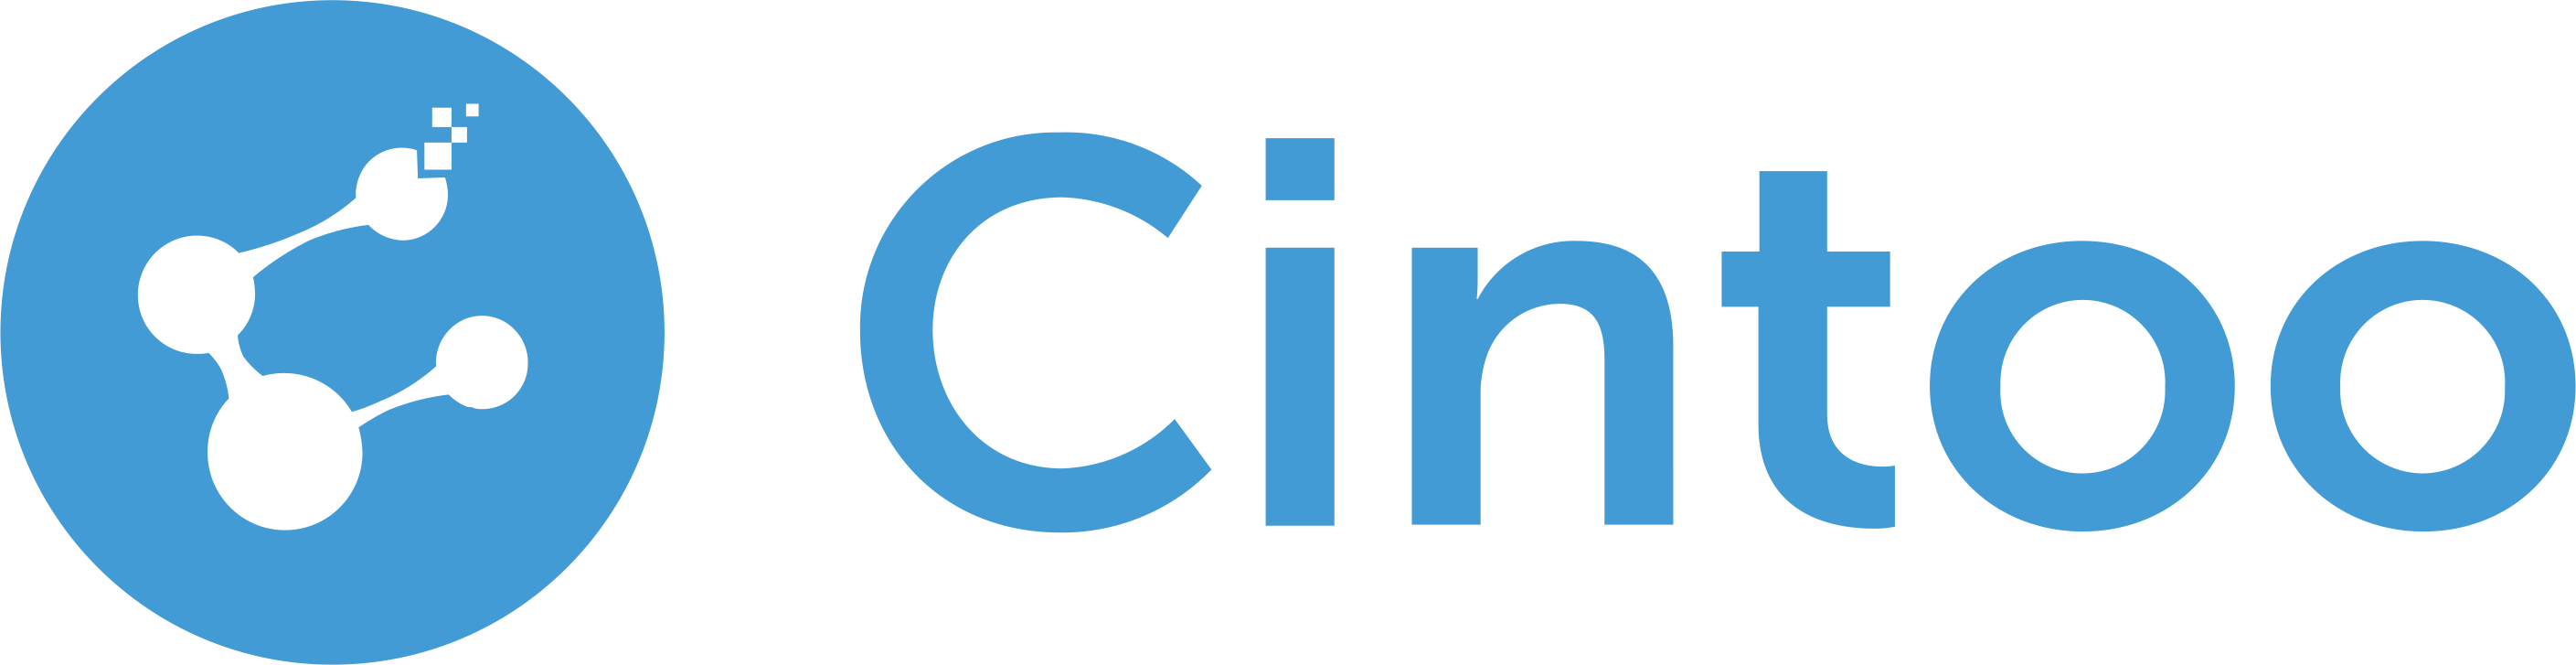 Cintoo Cloud logo